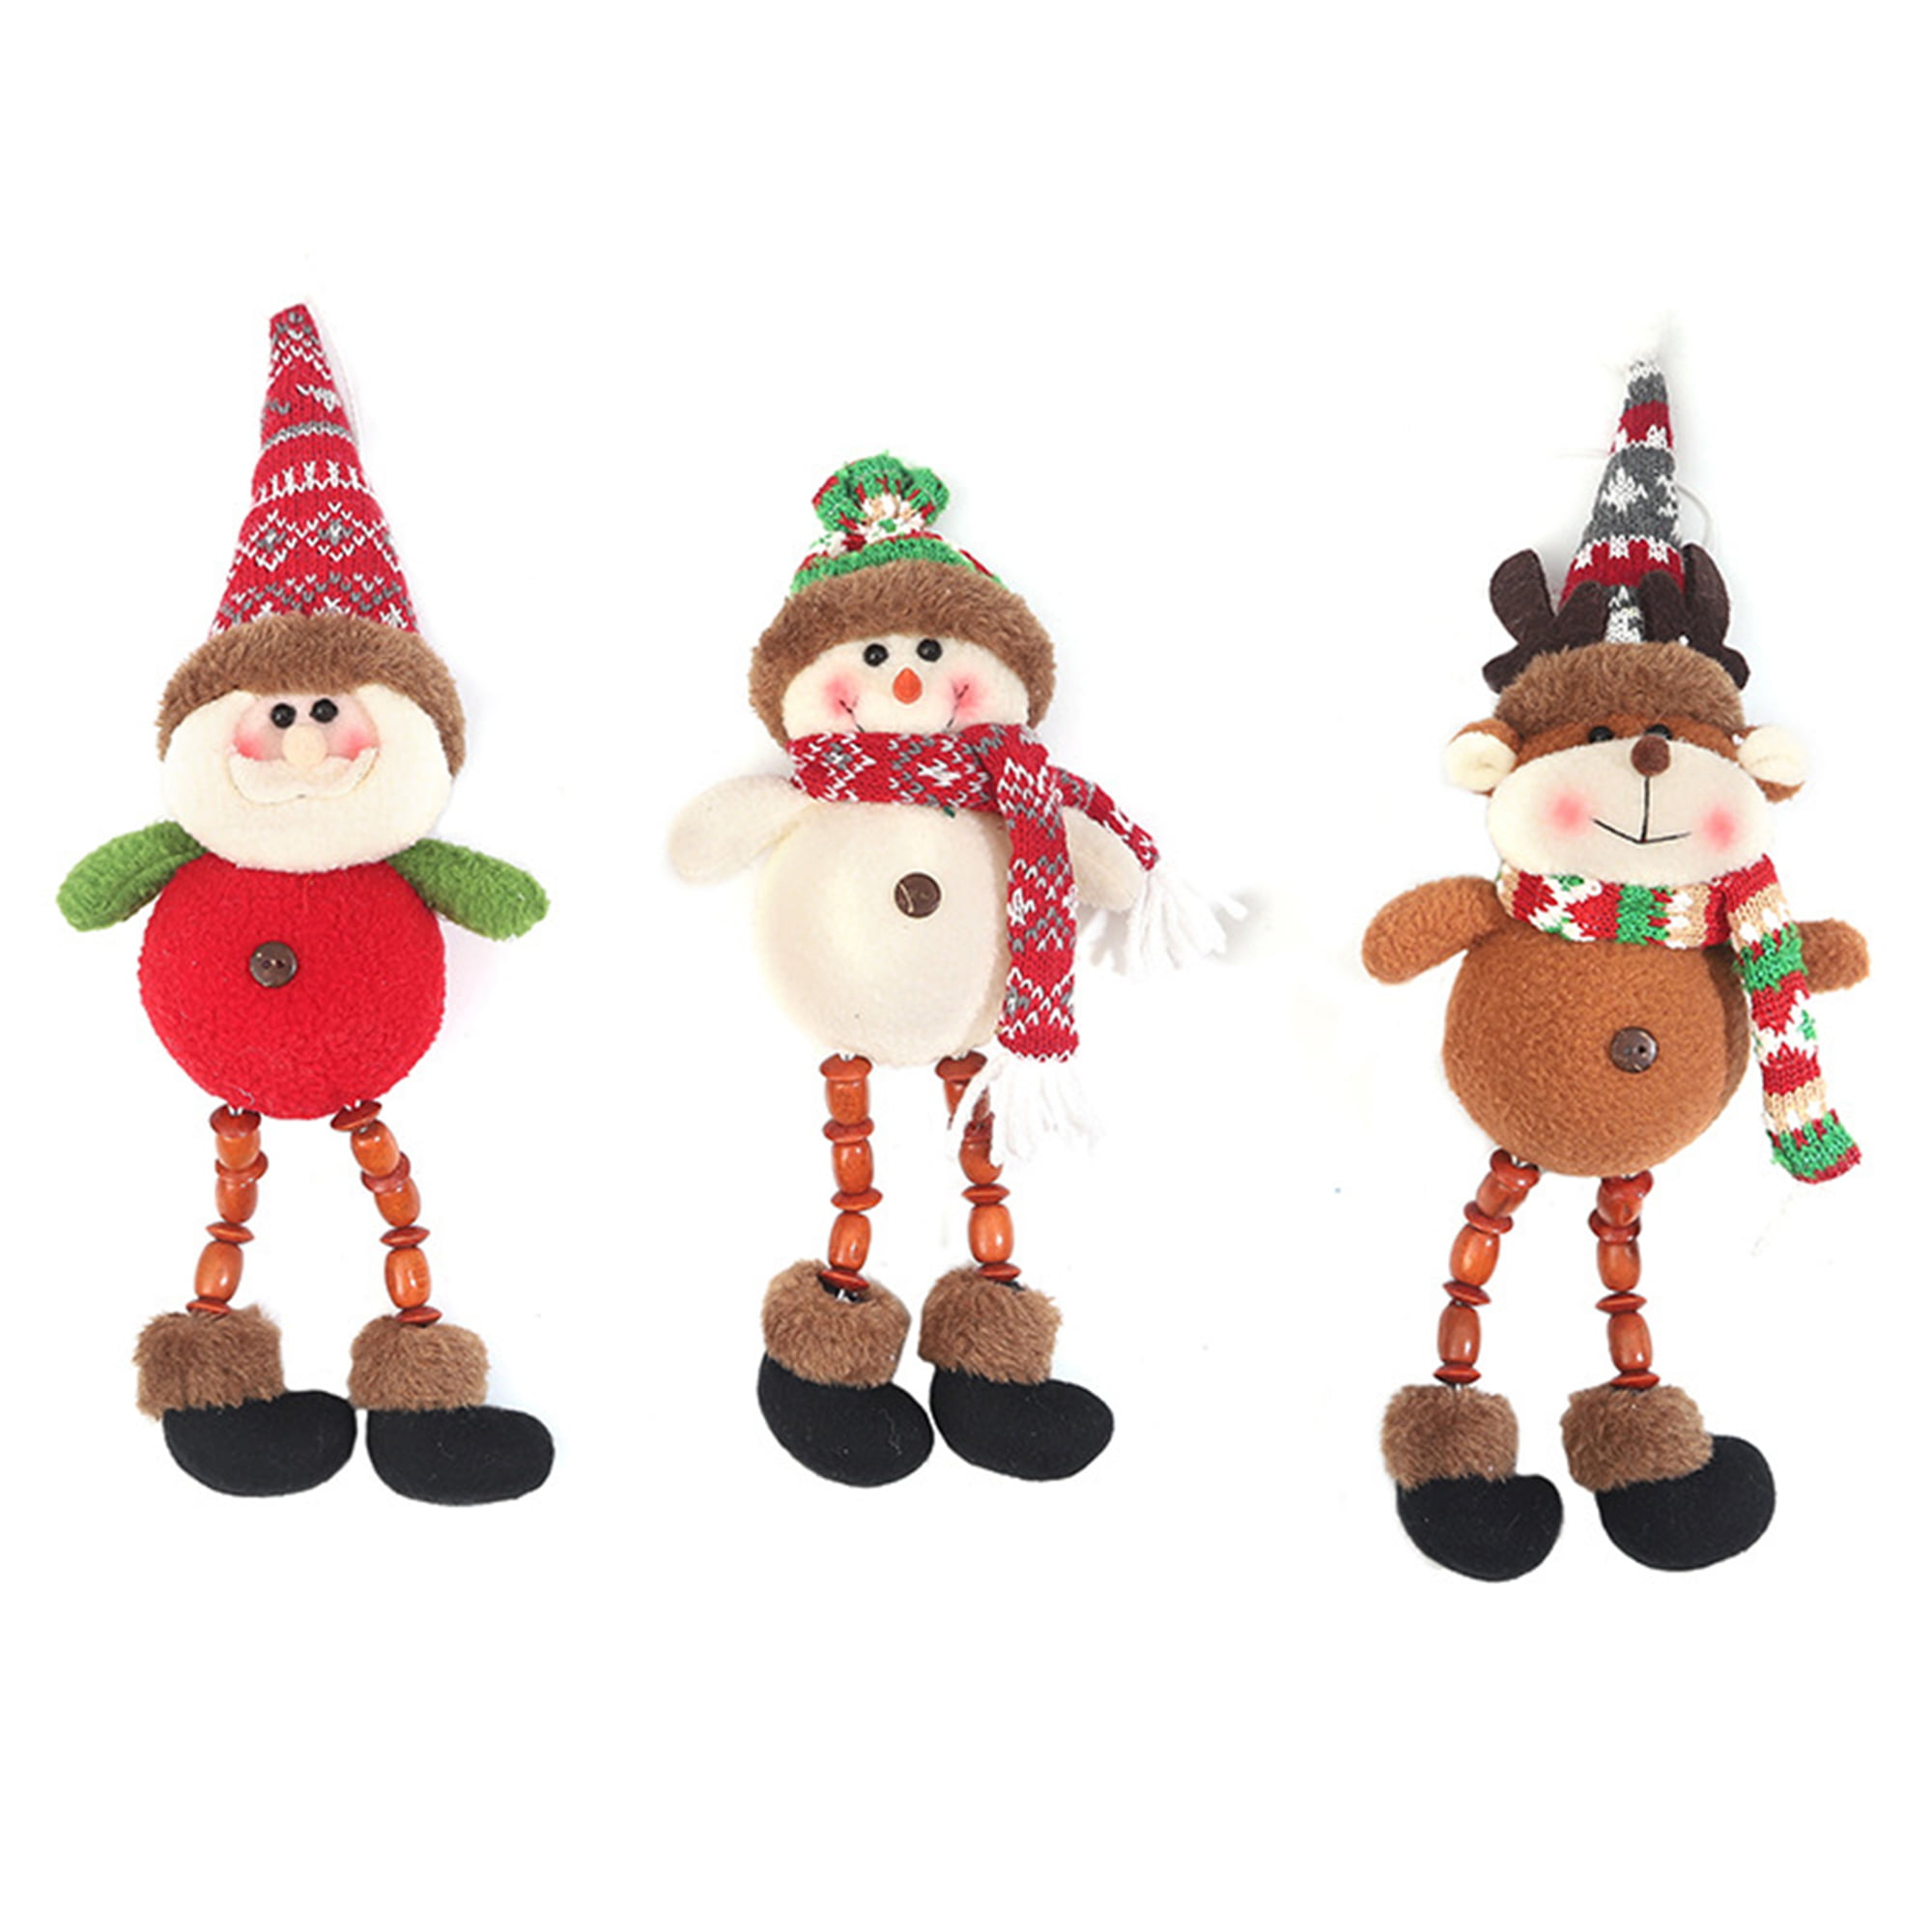 Santa Claus Snowman Elk Spring Doll Holiday Party Christmas Decor Ornaments LD 